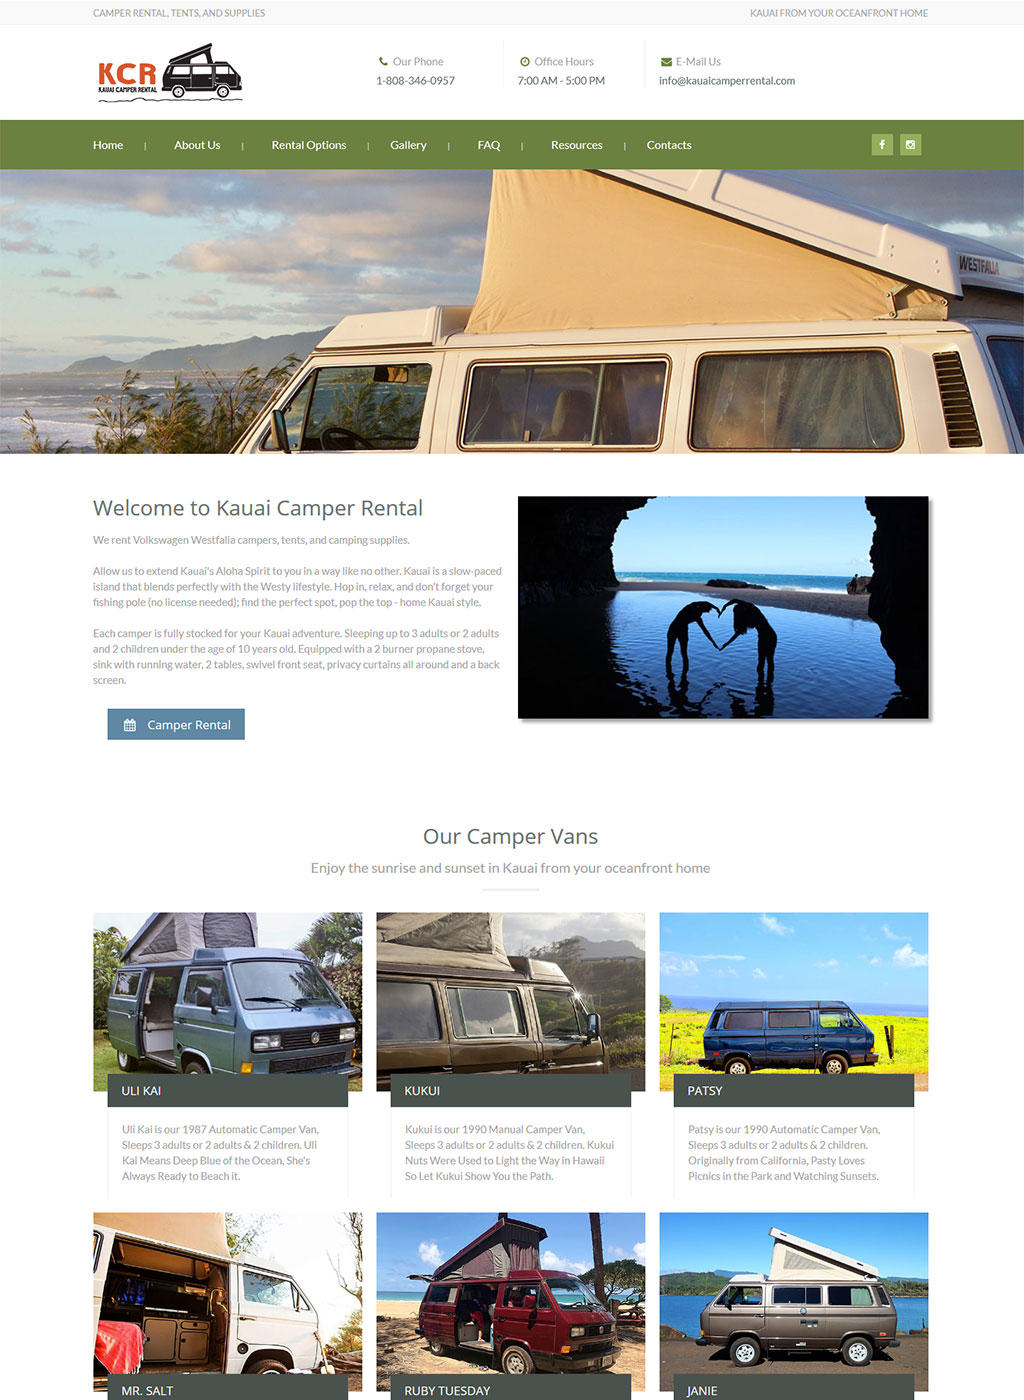 Website developed for a camper rental business on Kauai